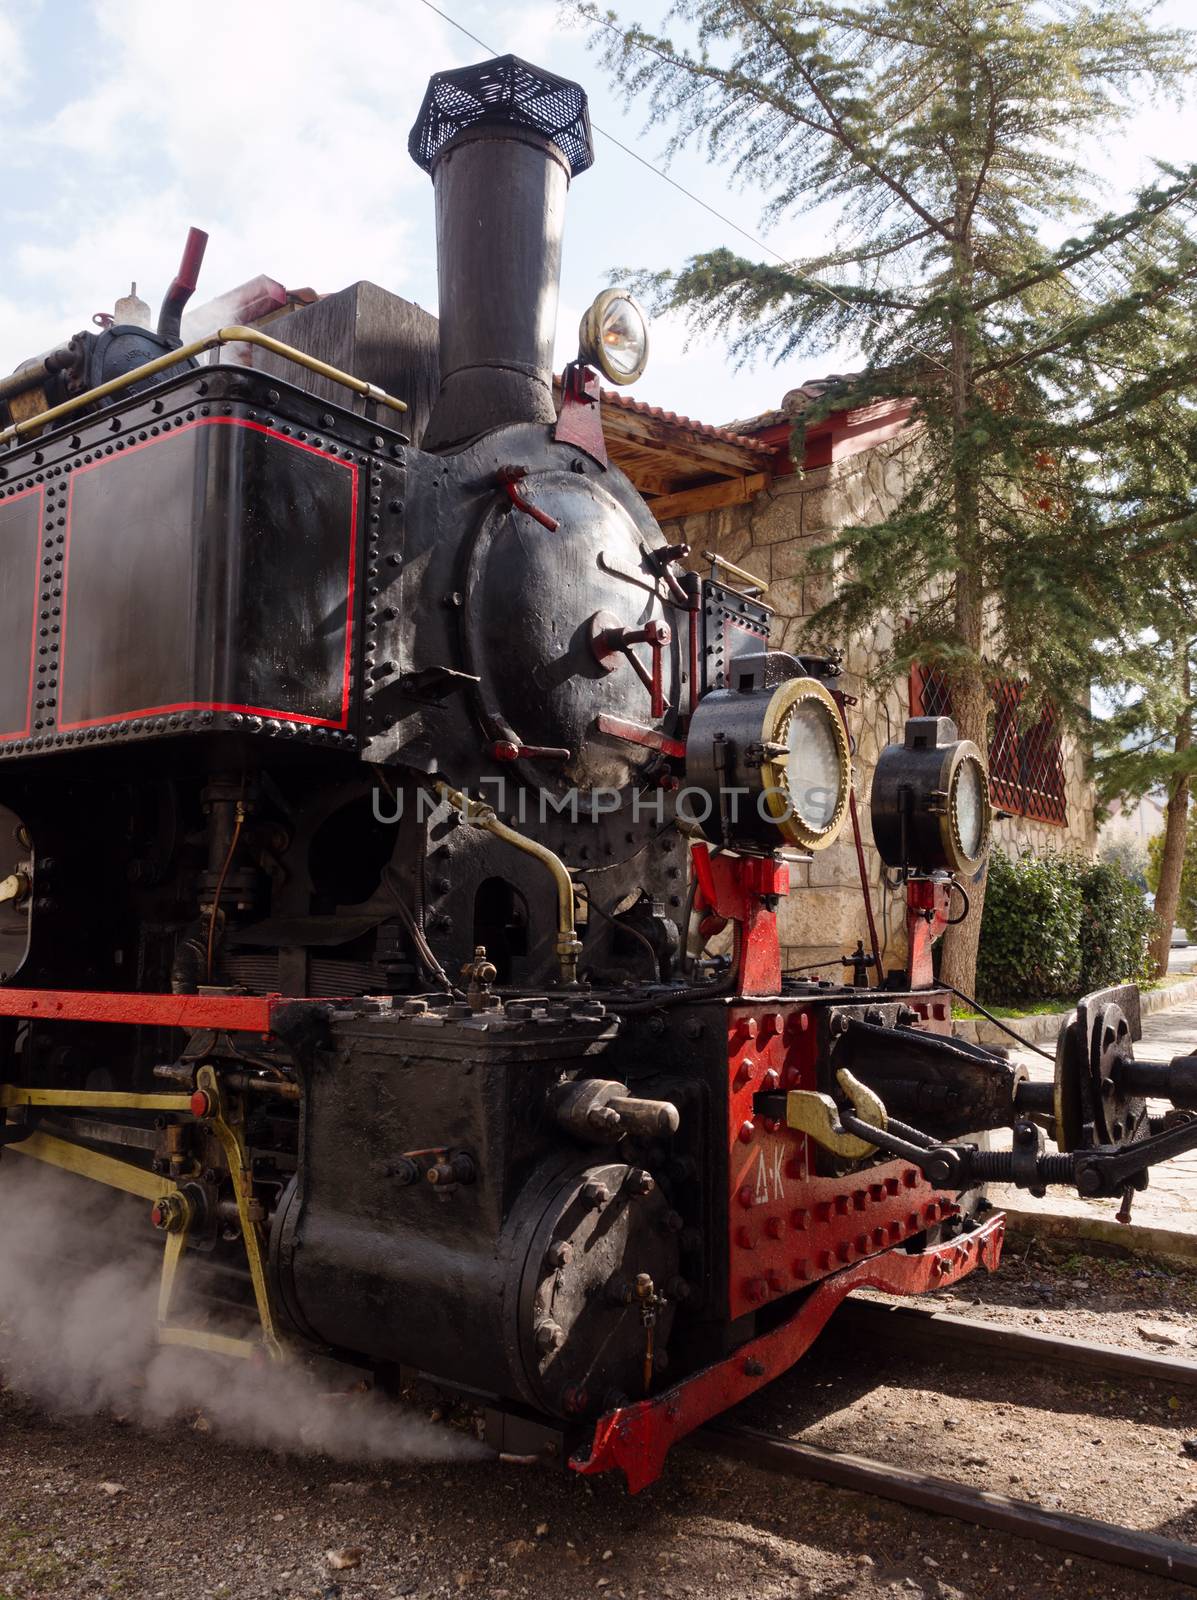 Old vinatge steam powered train at the train station of Kalavrita Greece, 